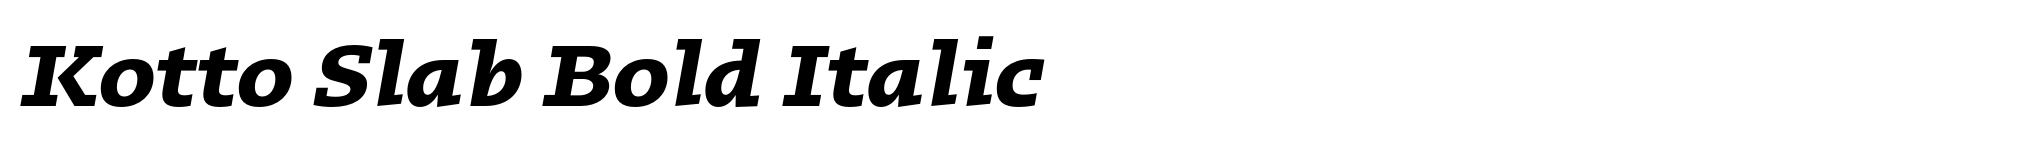 Kotto Slab Bold Italic image